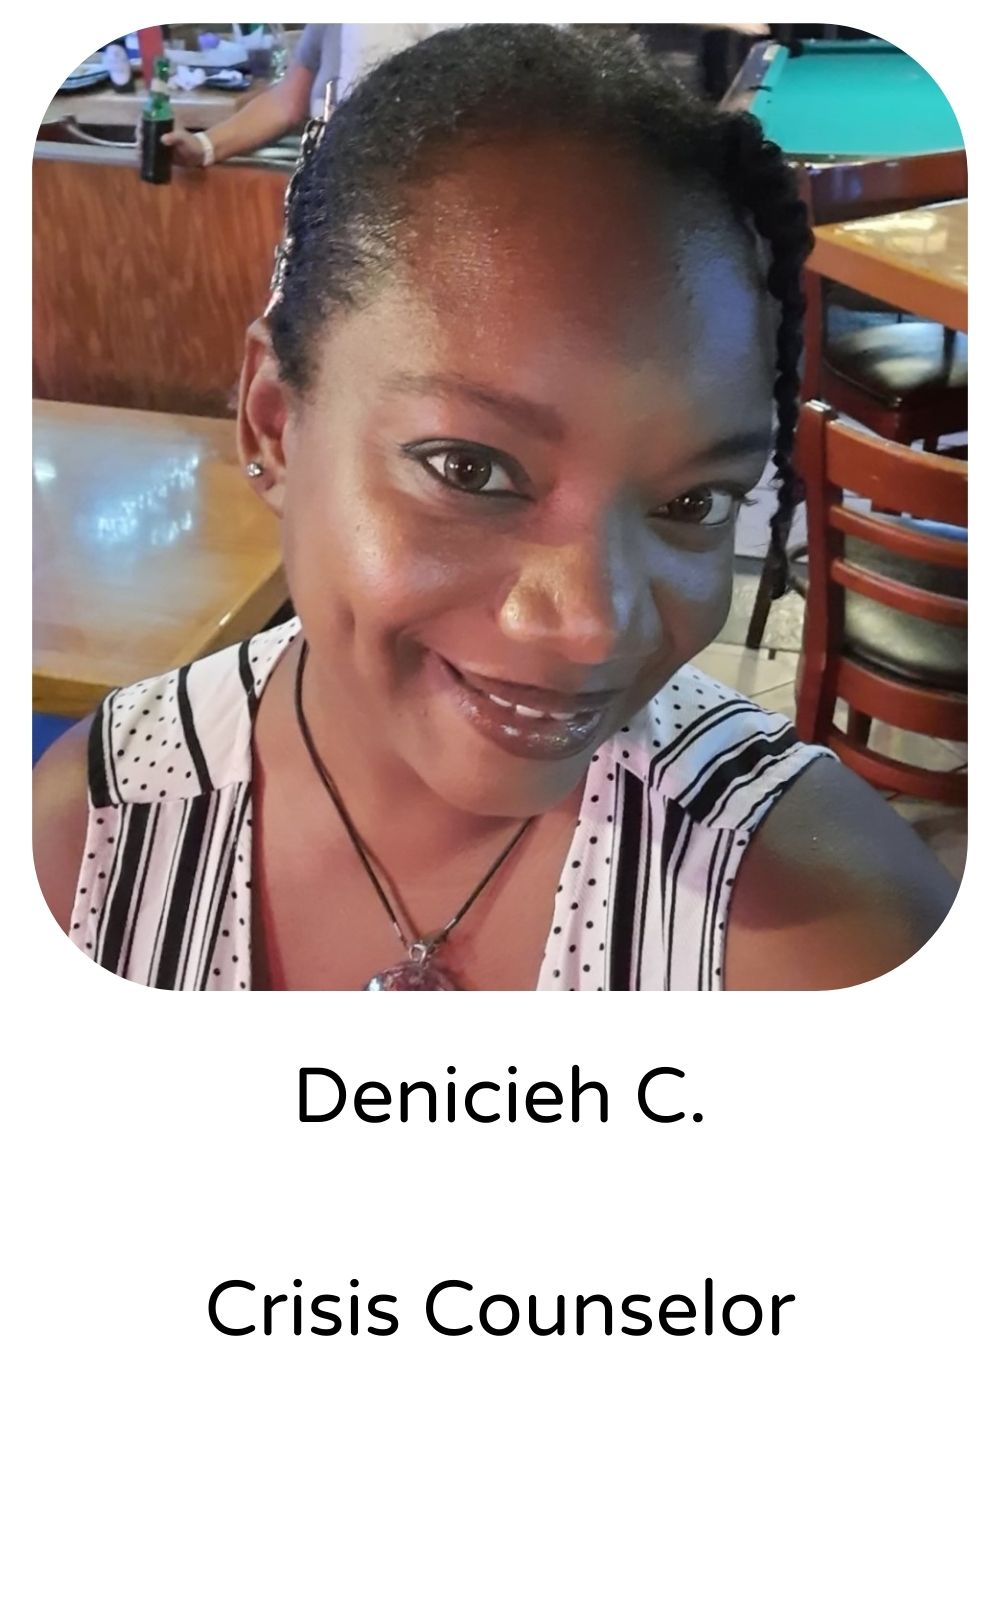 Danicieh C, Crisis Counselor